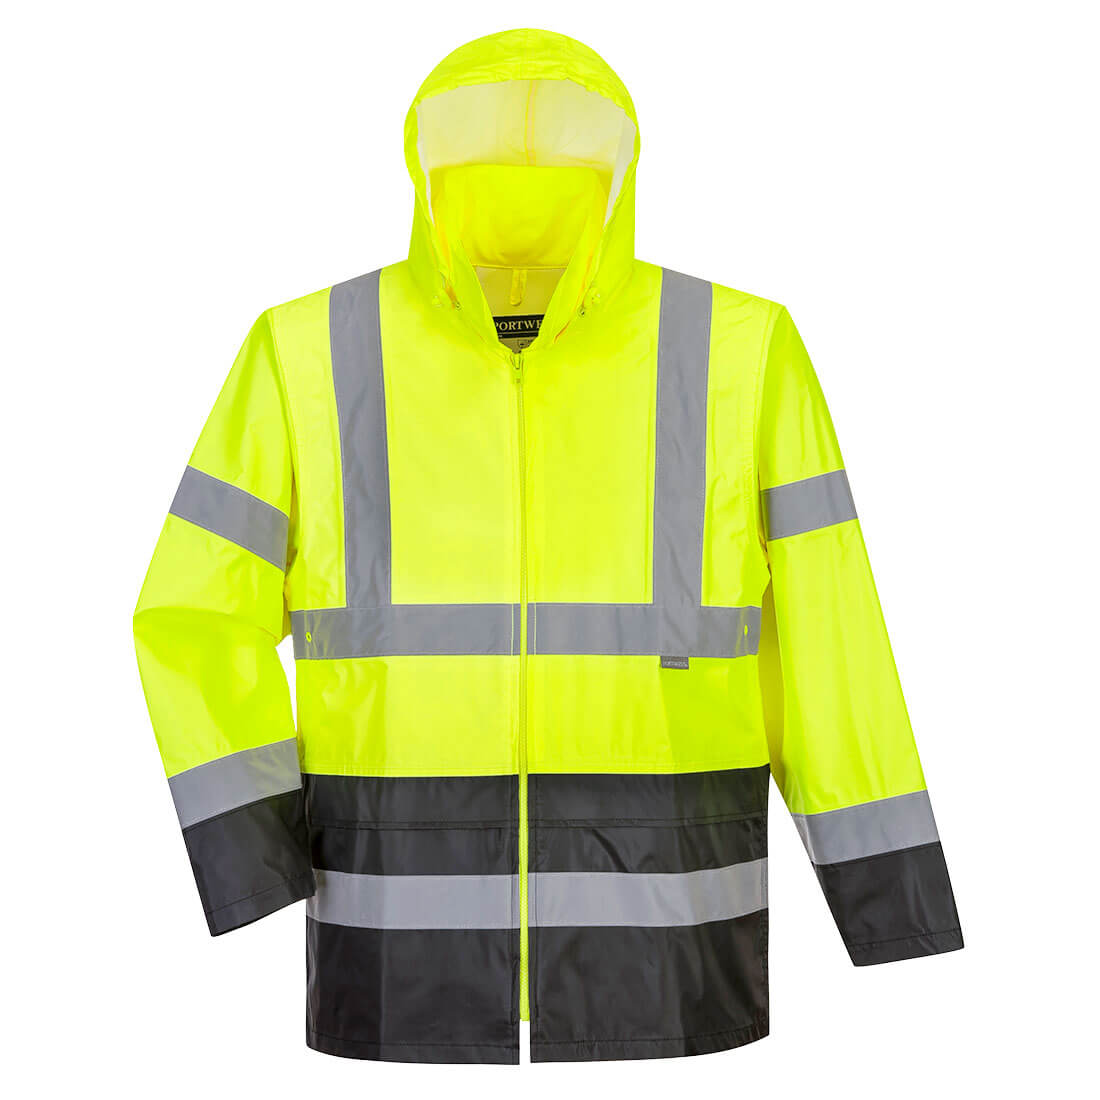 Portwest Classic Adult Raincoat - S438 Rain Jacket